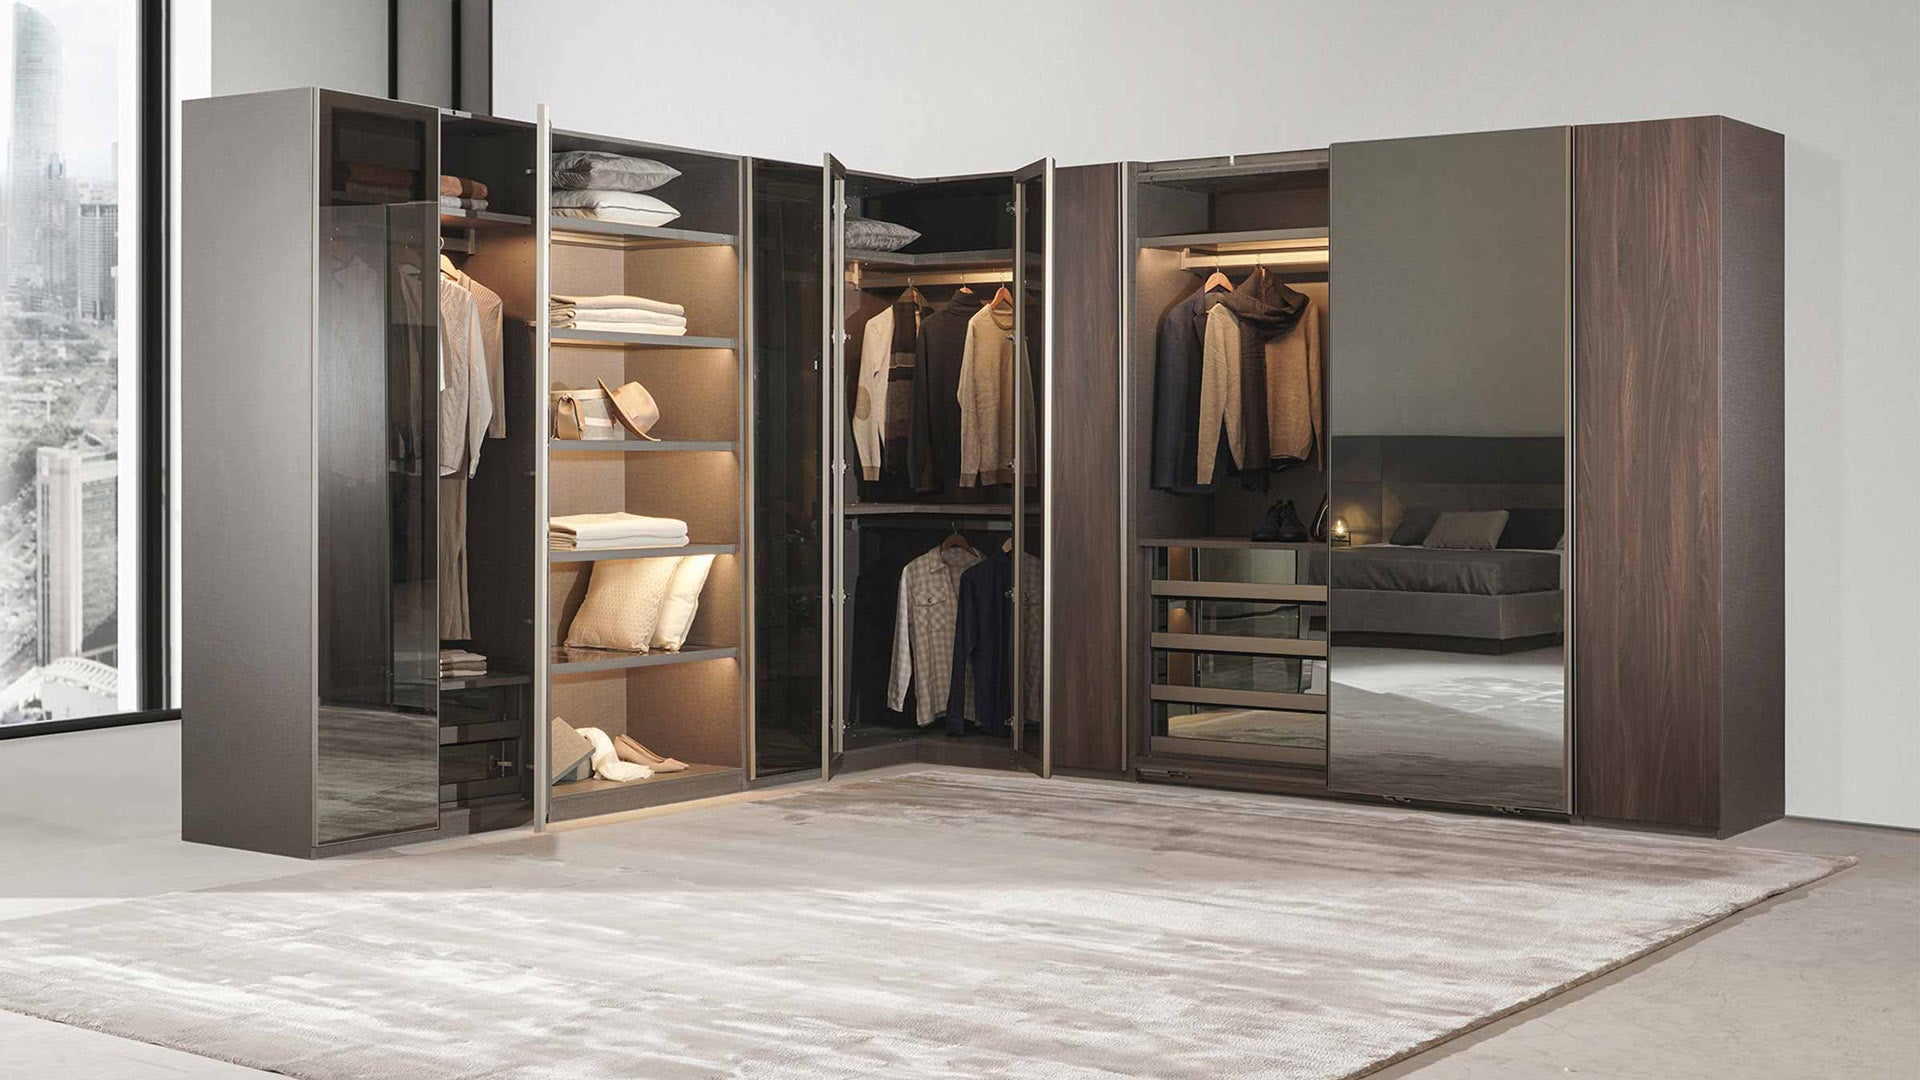 Exclusive Walk-in Closet Design - Made in Italy